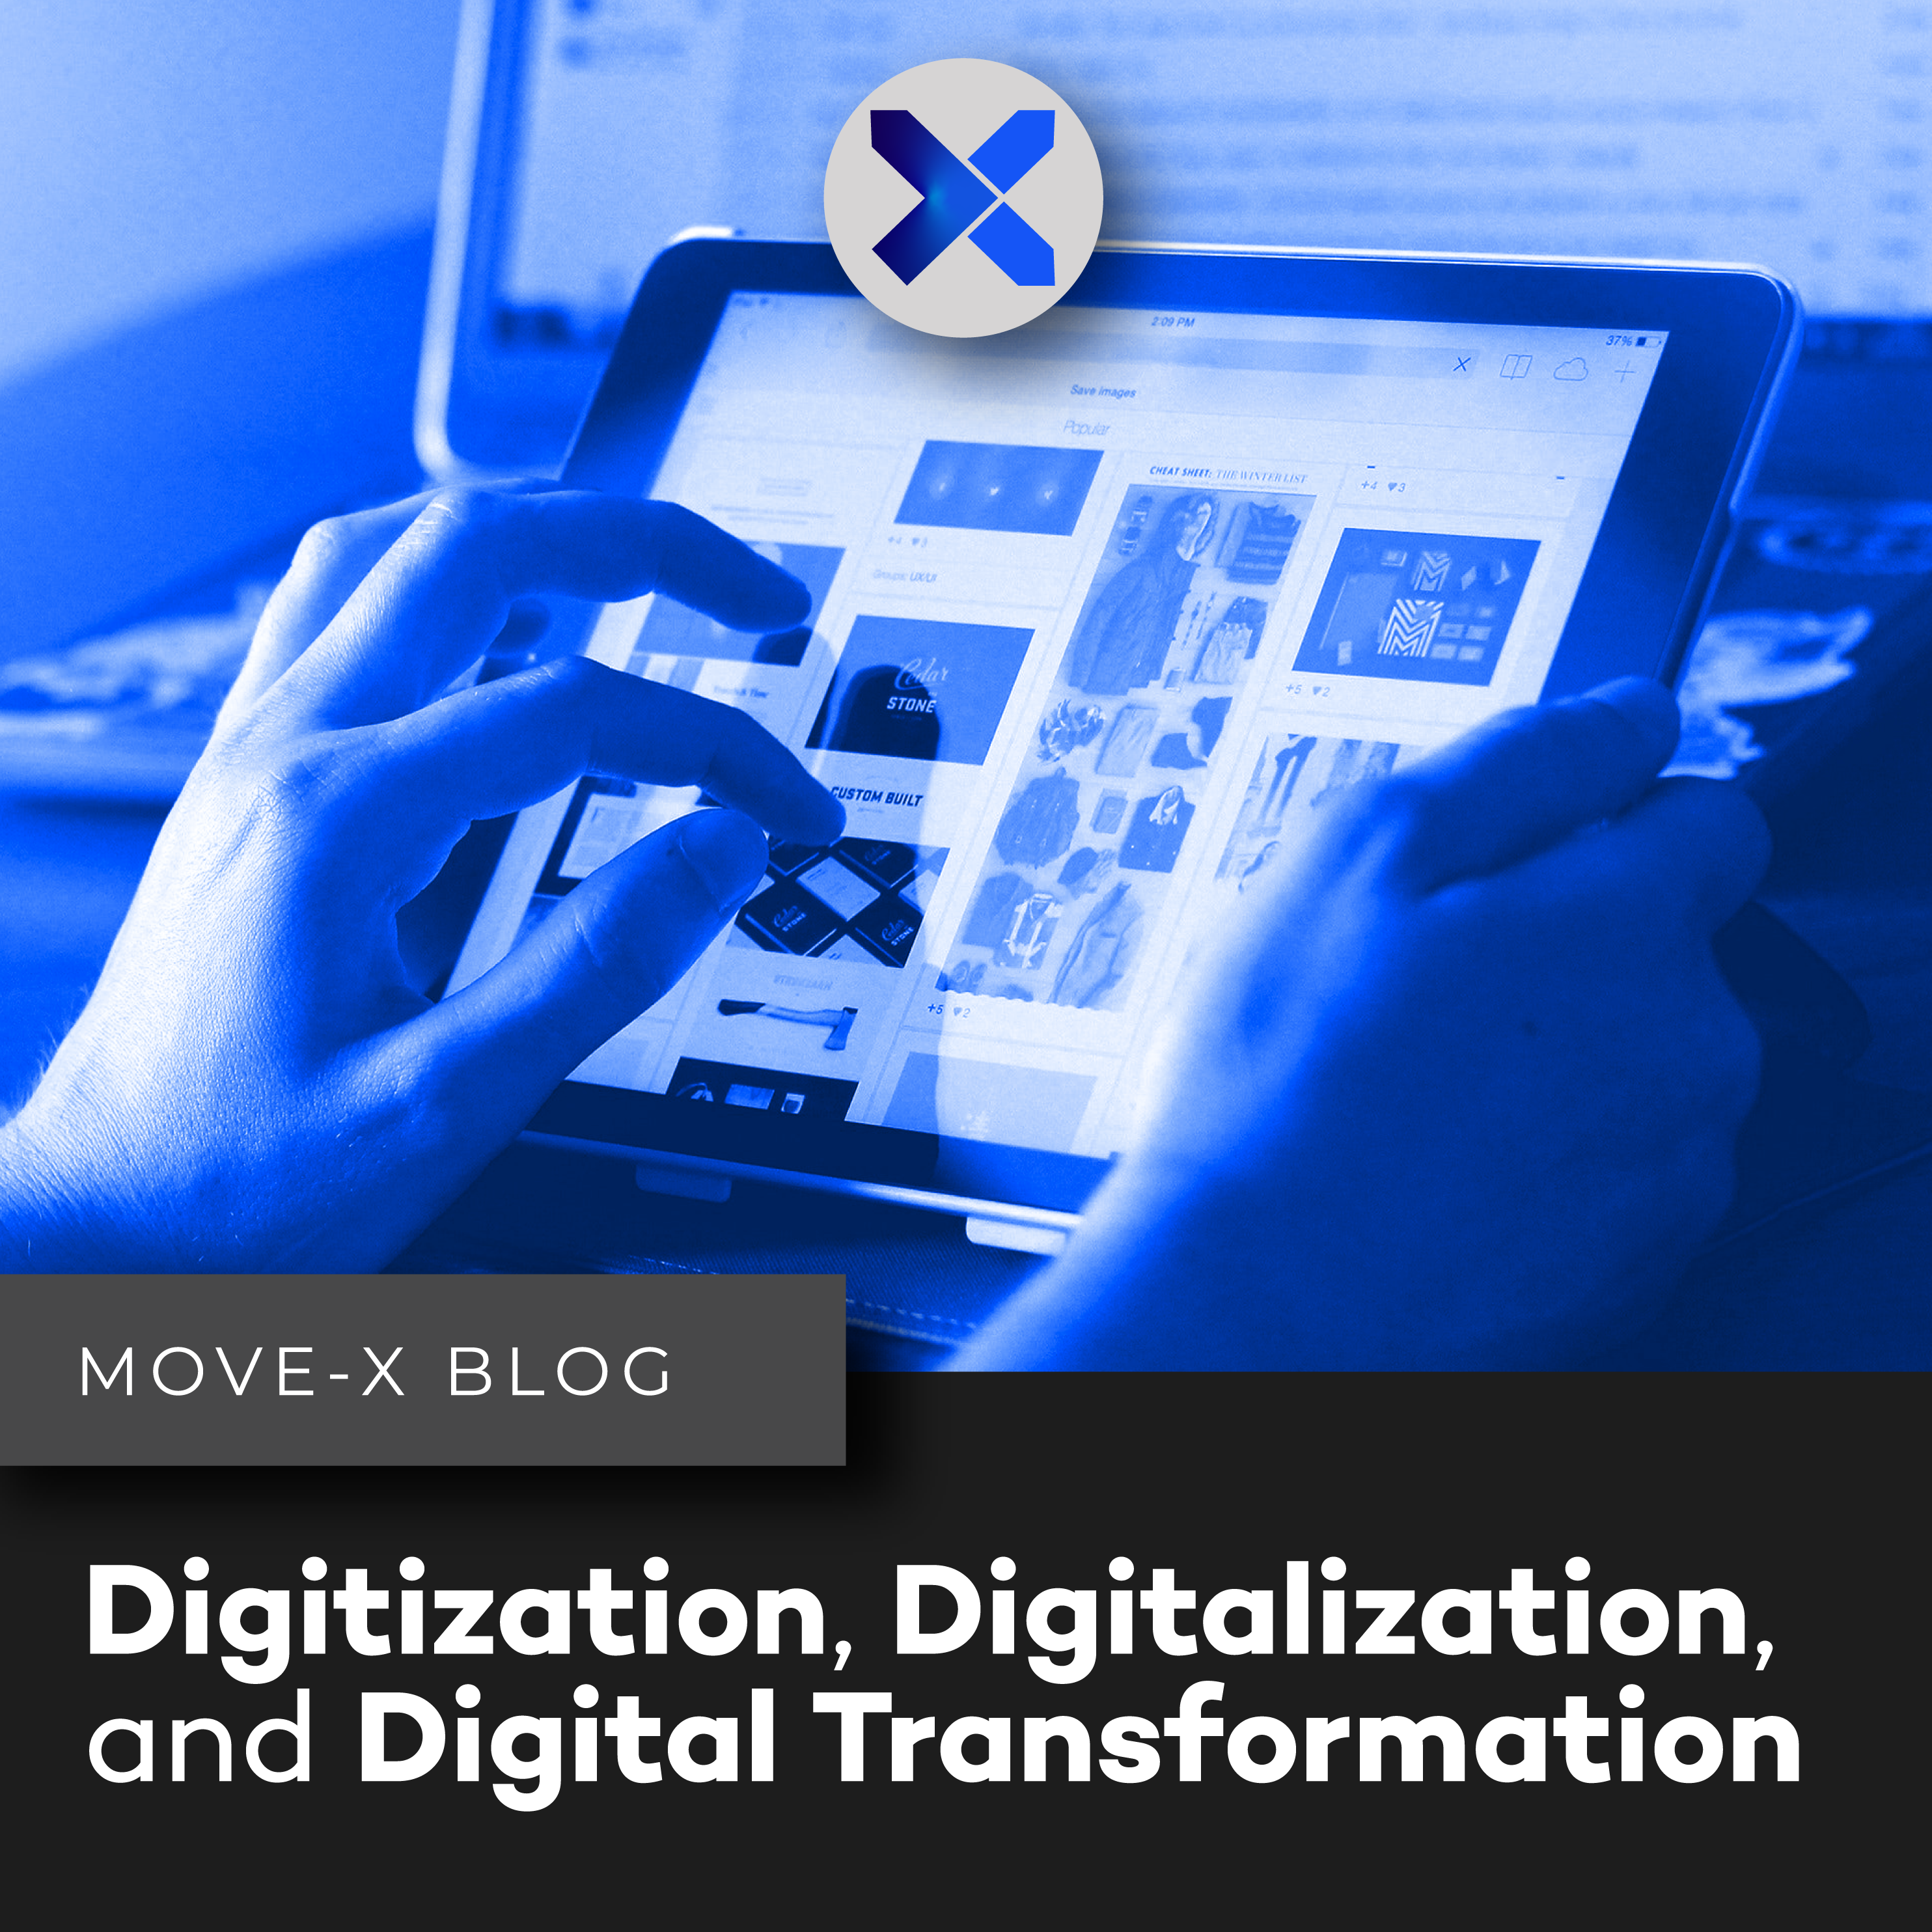 Move-X Blog Digitization, Digitalization, and Digital Transformation